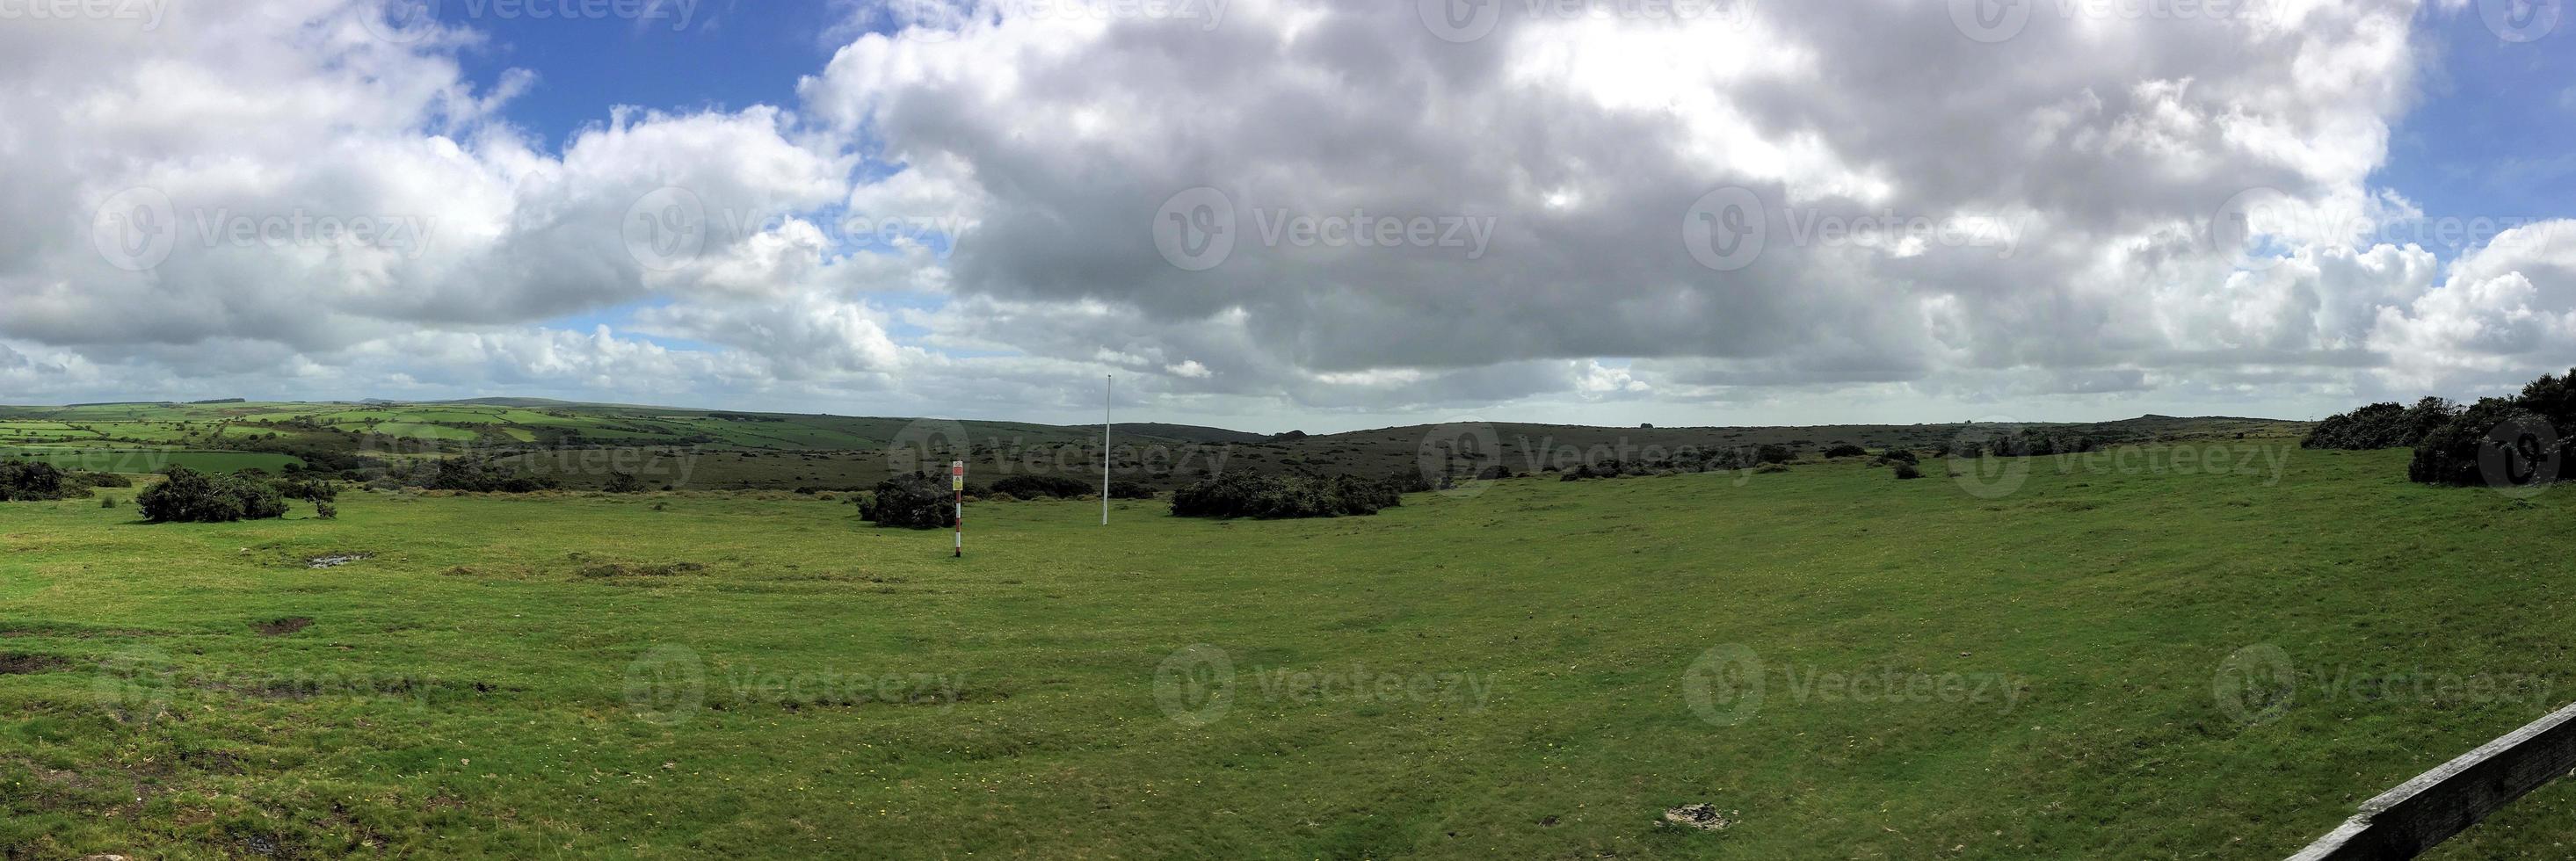 une vue sur la campagne de cornouailles près de dartmoor photo